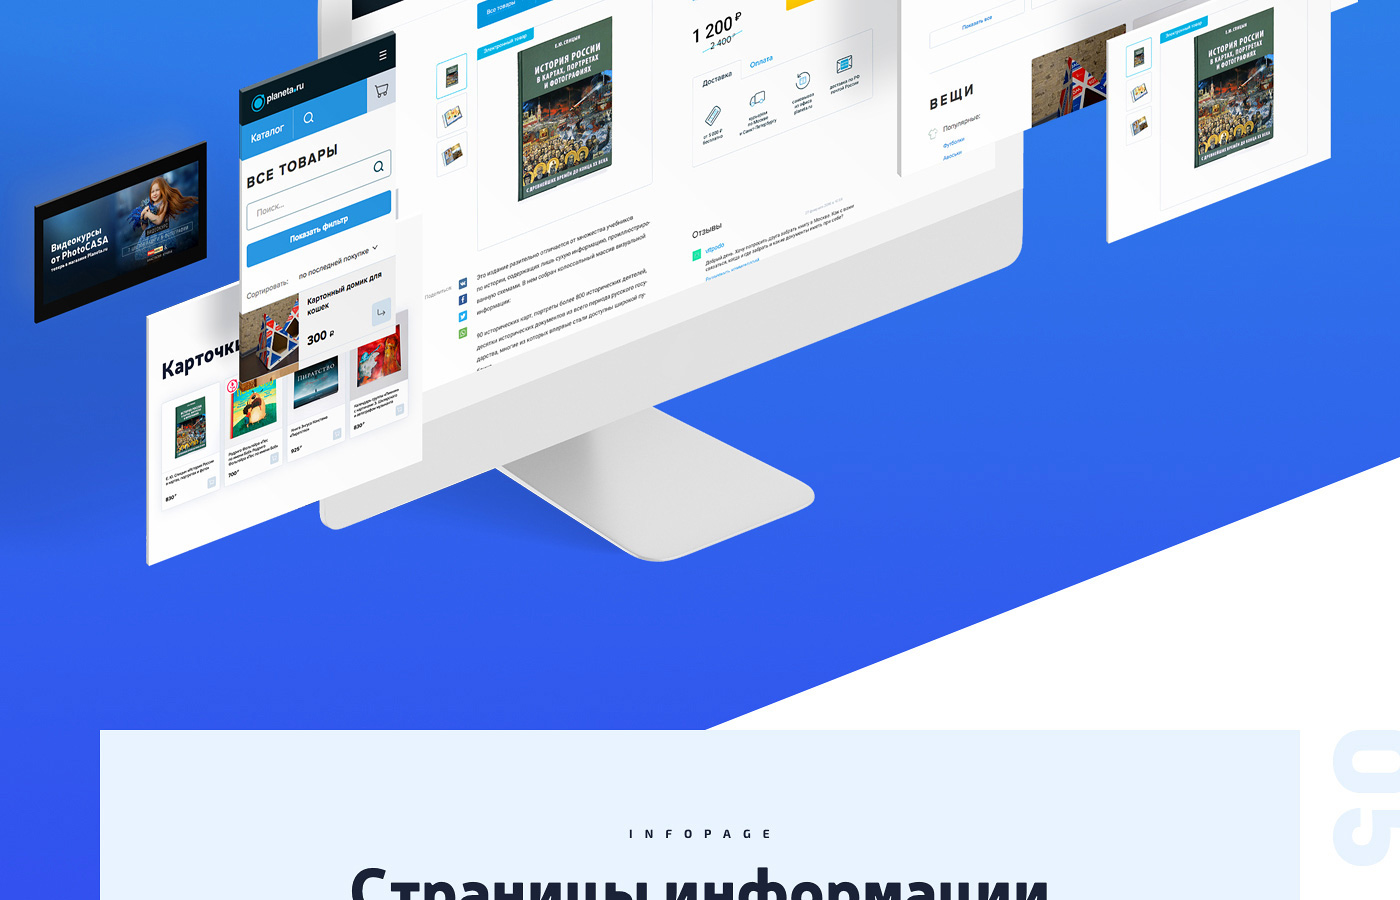 planeta.ru crowdfunding Online shop